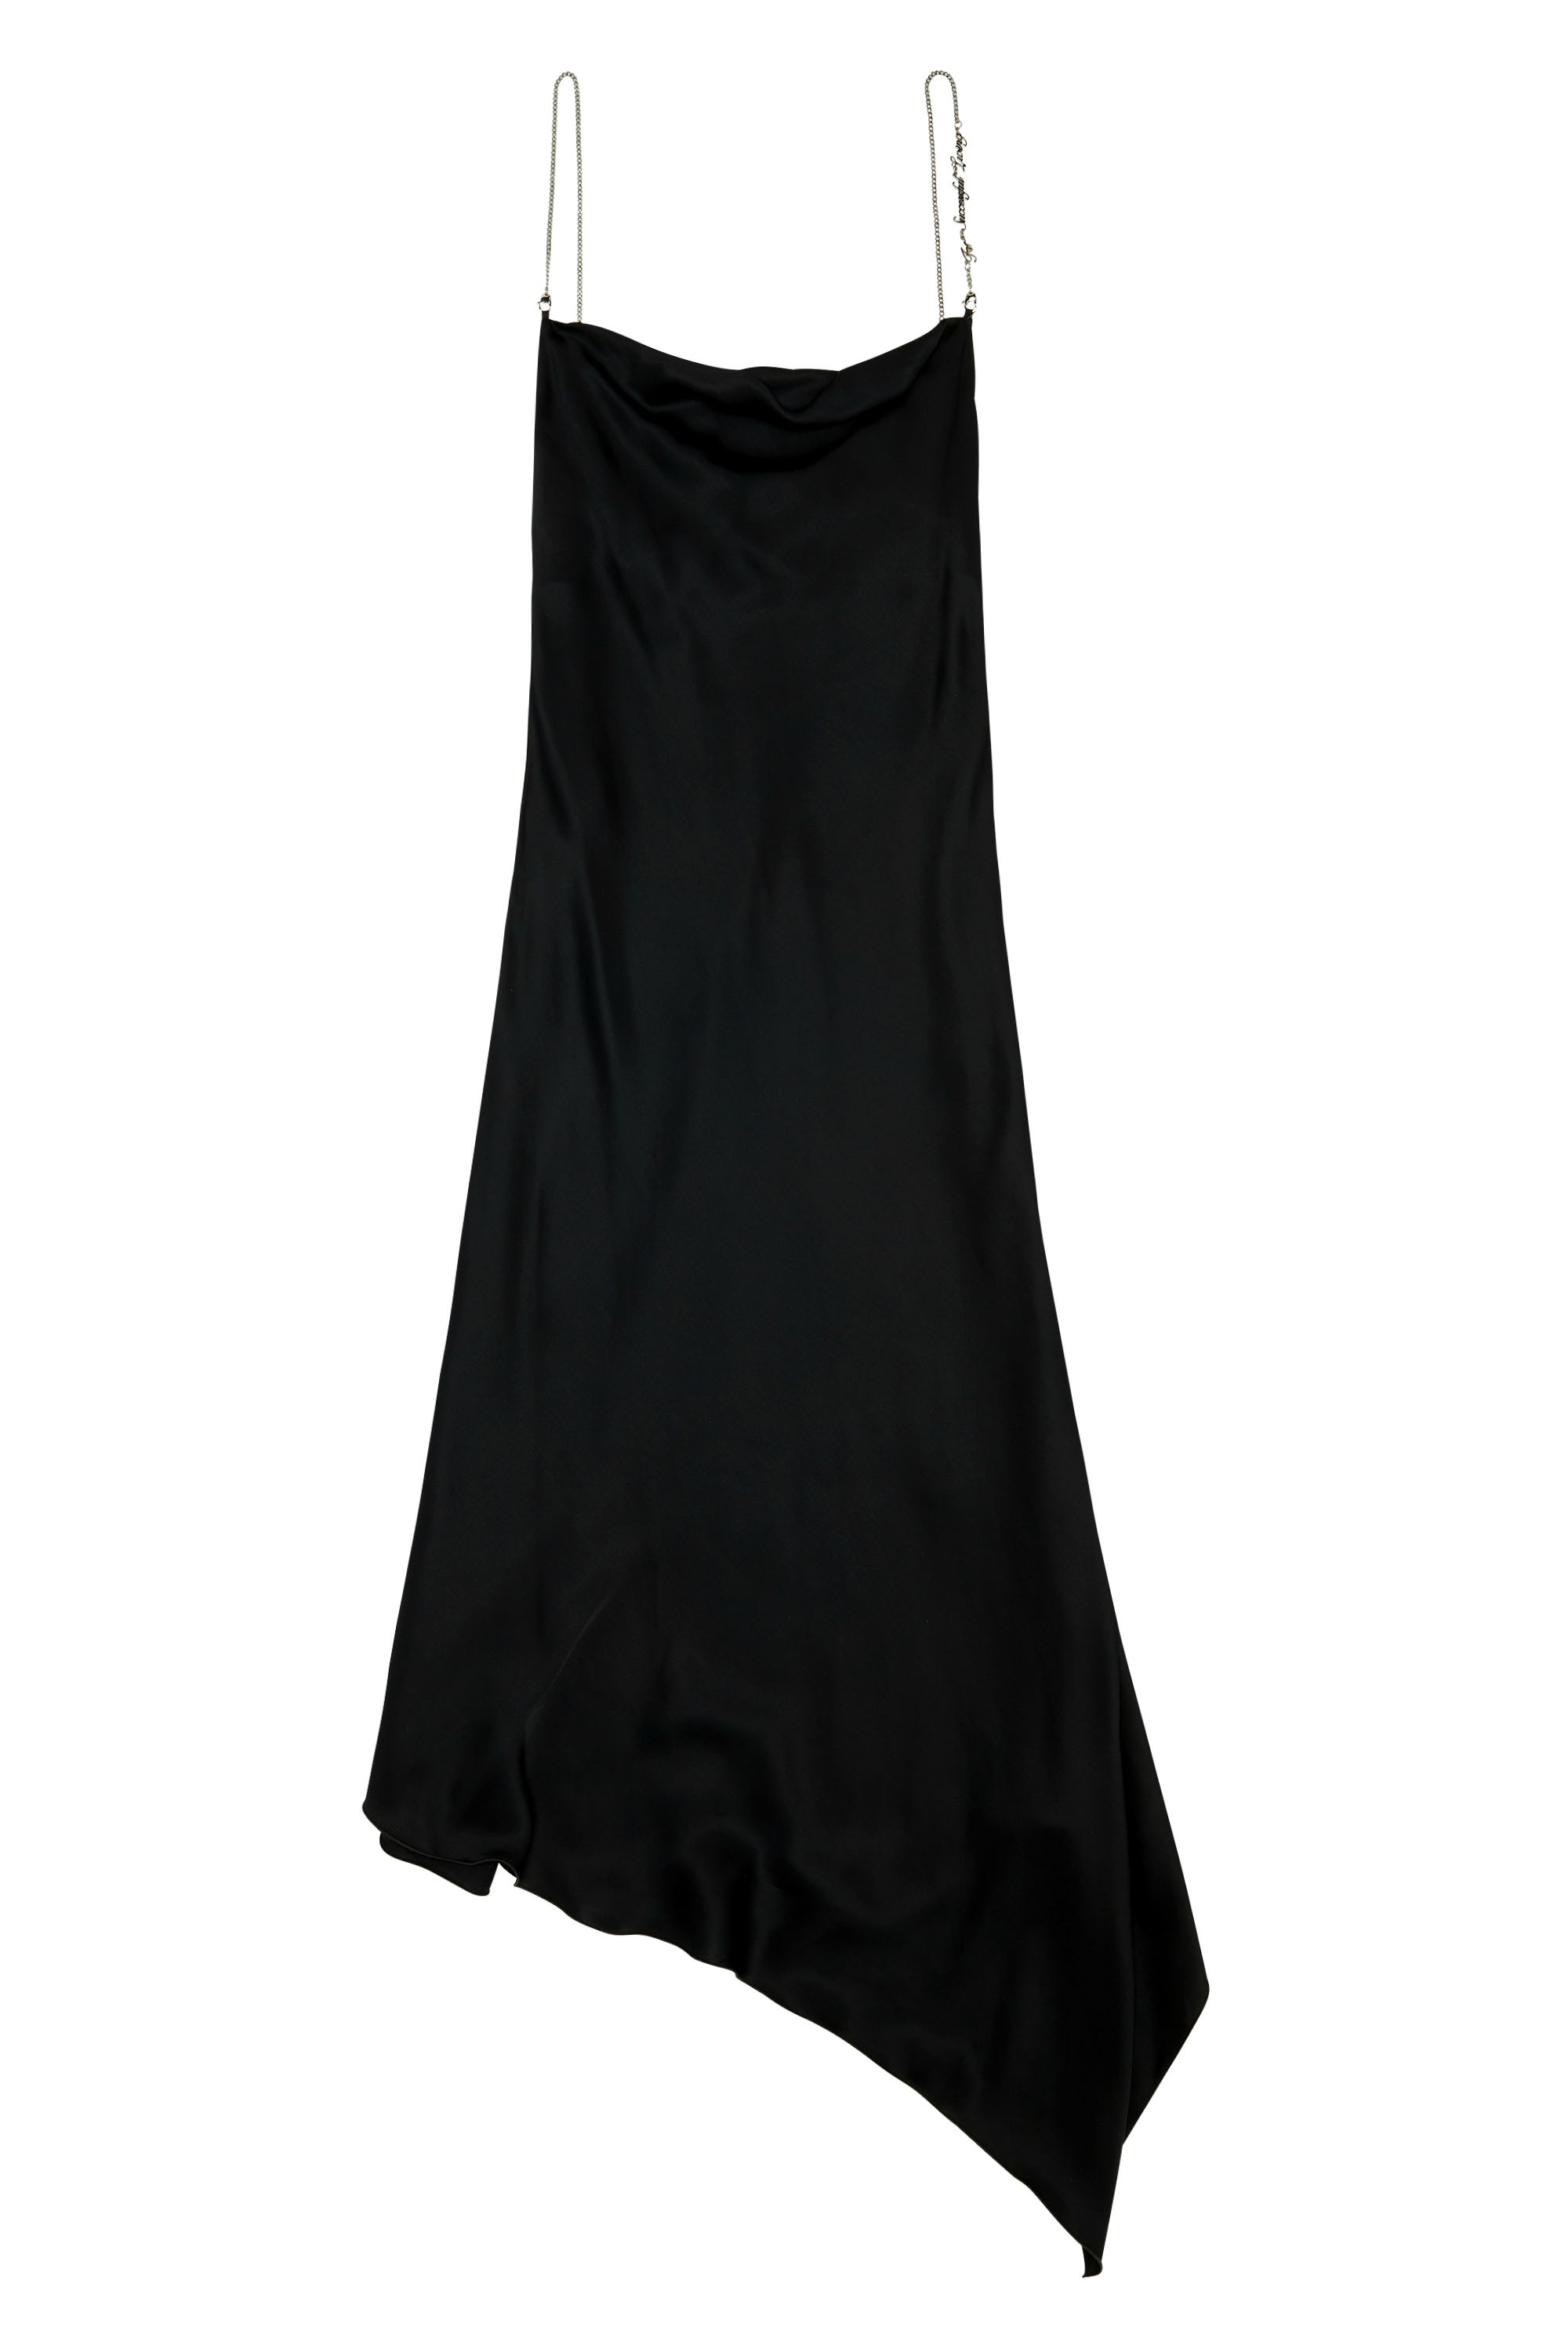 Diesel Satin Slip Dress With Chain Straps In Black